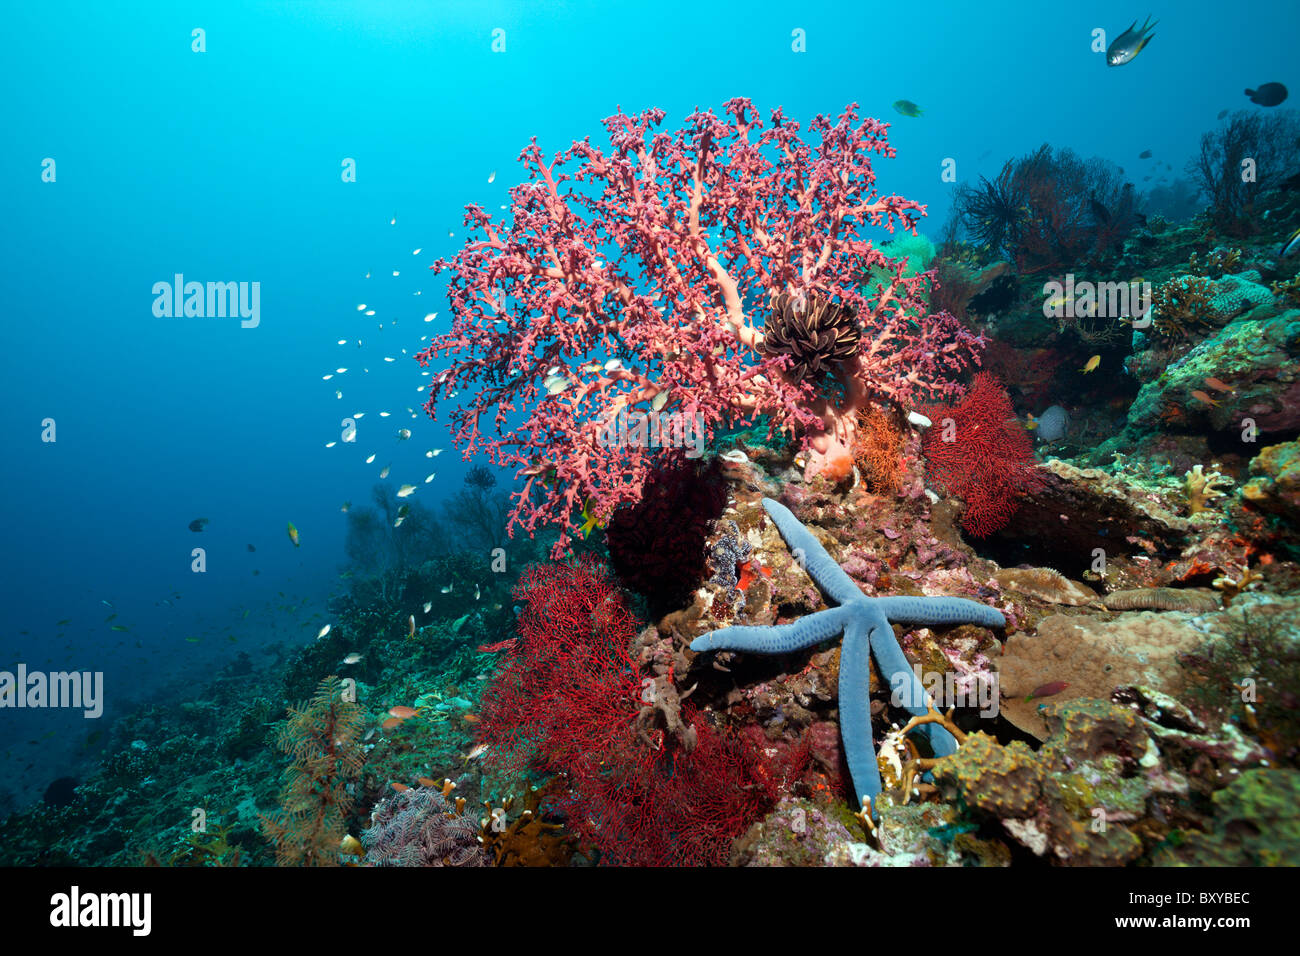 Coral Reef with Starfish, Linckia laevigata, Amed, Bali, Indonesia Stock Photo